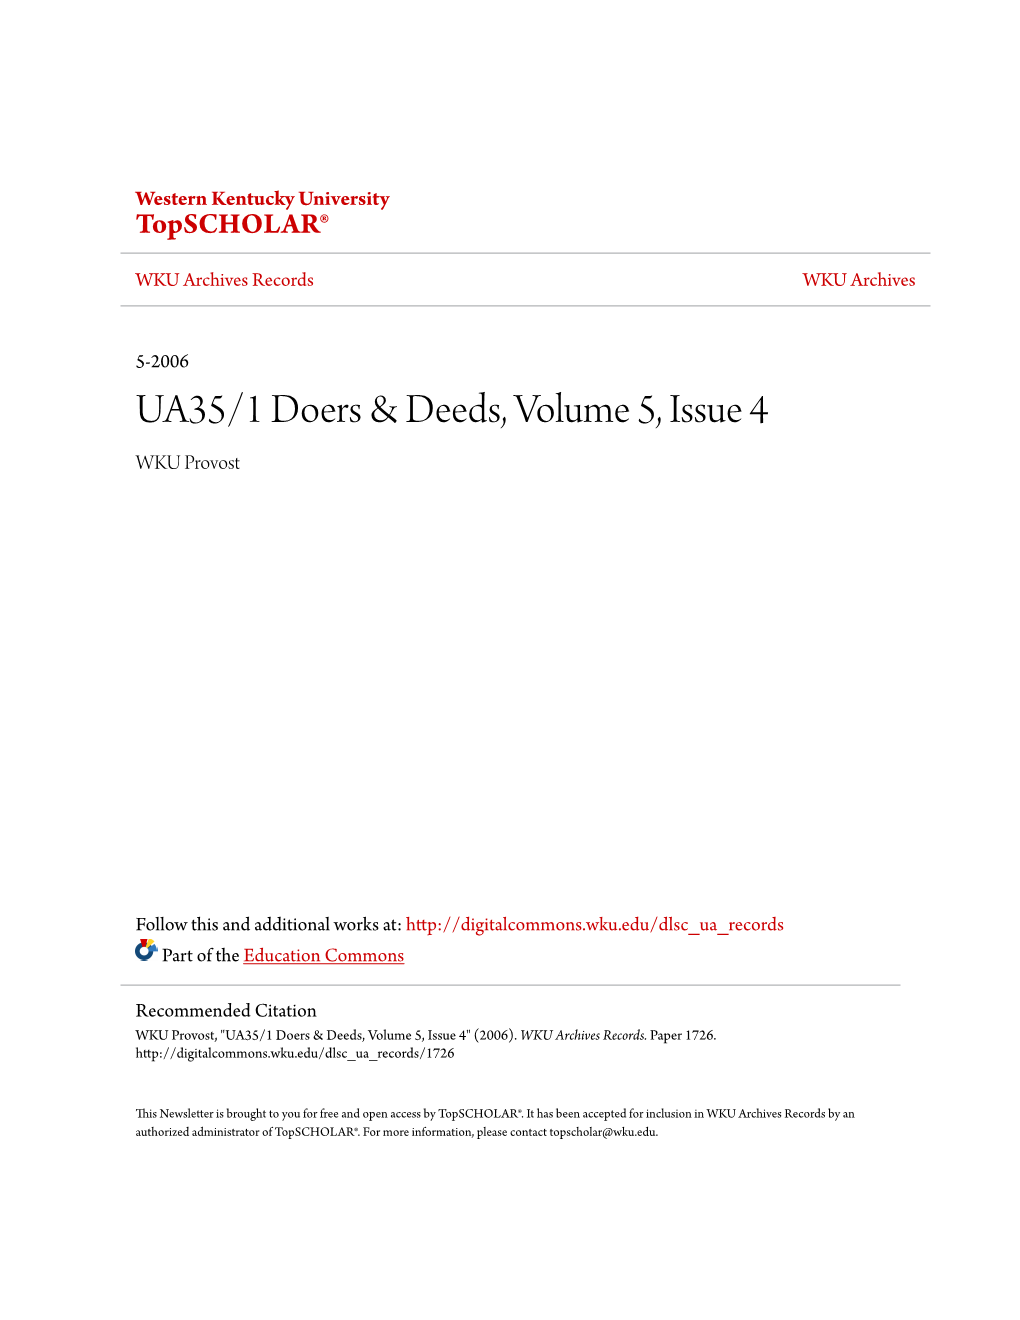 UA35/1 Doers & Deeds, Volume 5, Issue 4